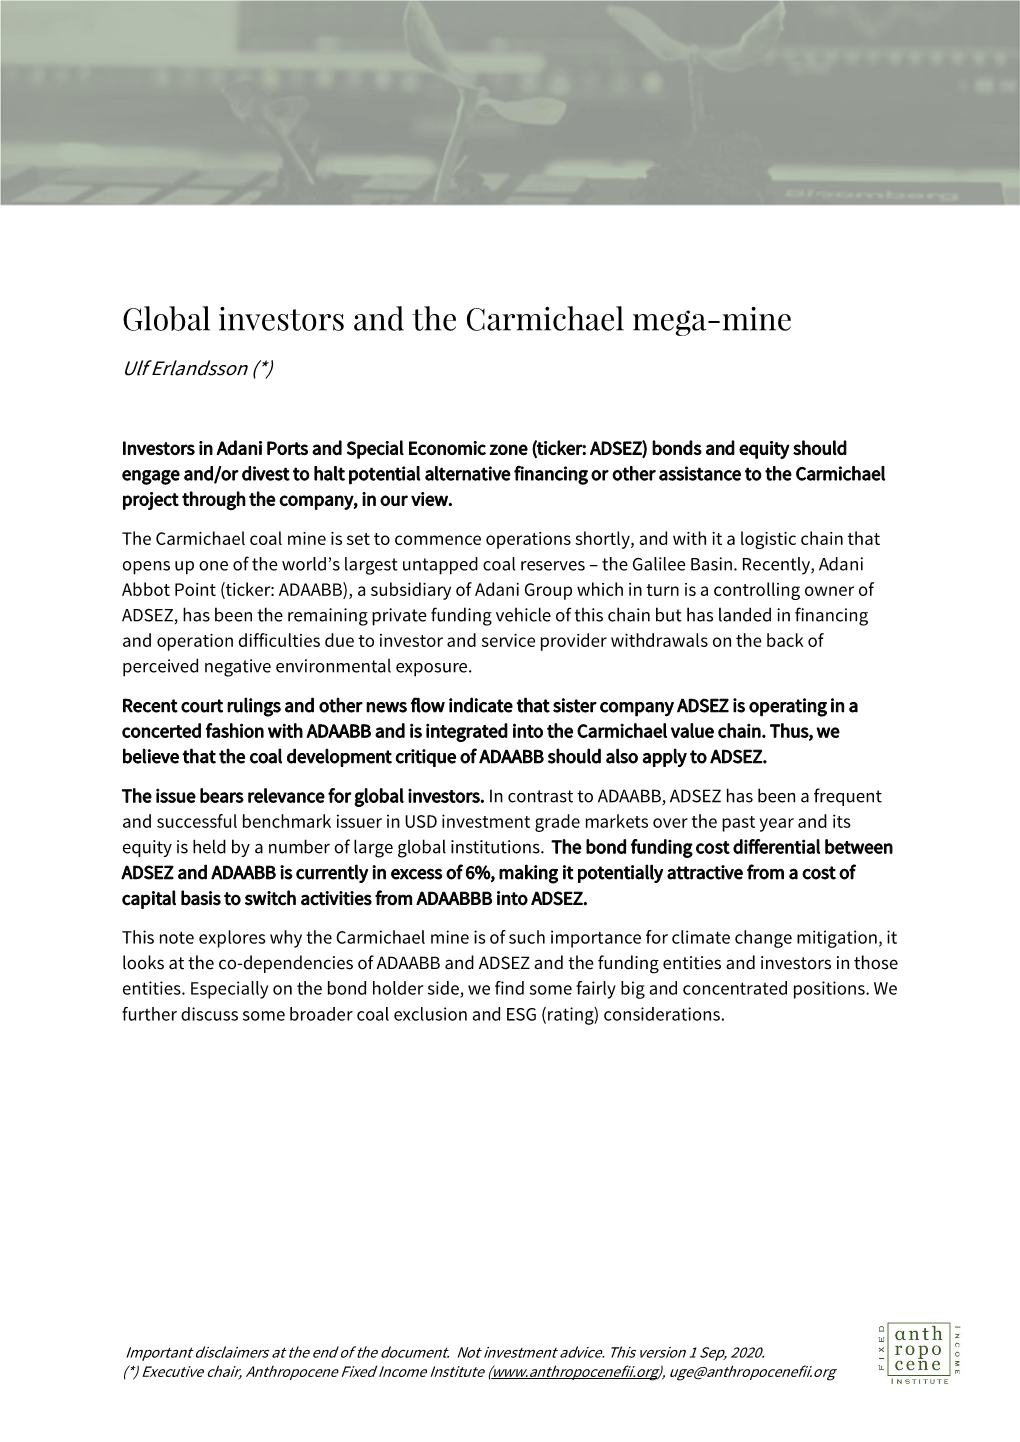 Global Investors and the Carmichael Mega-Mine